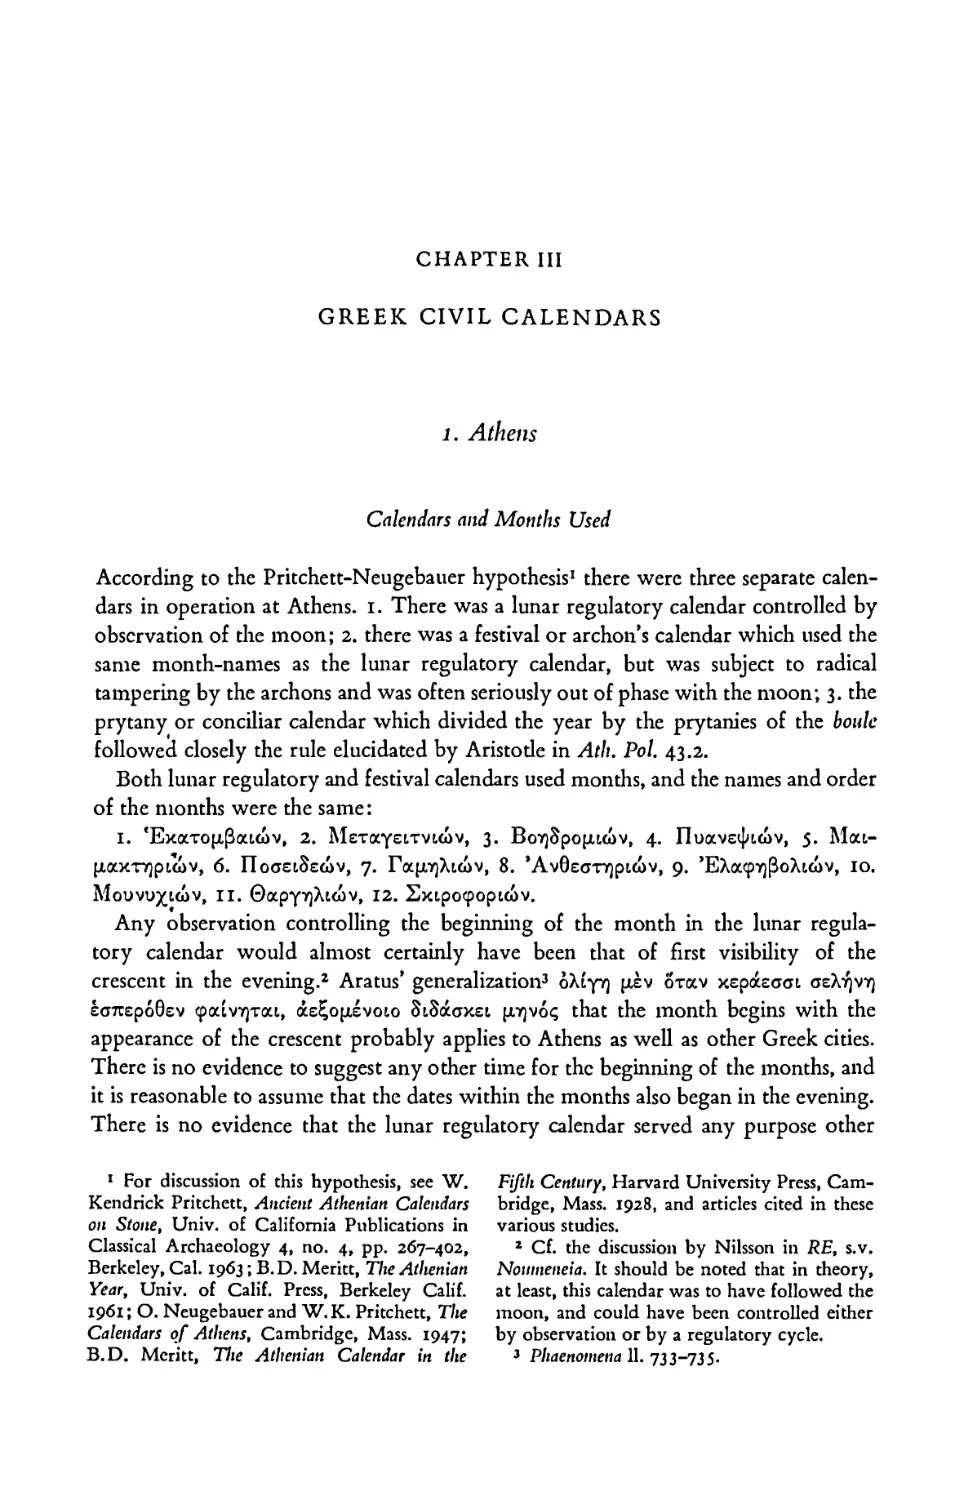 CHAPTER III. GREEK CIVIL CALENDARS